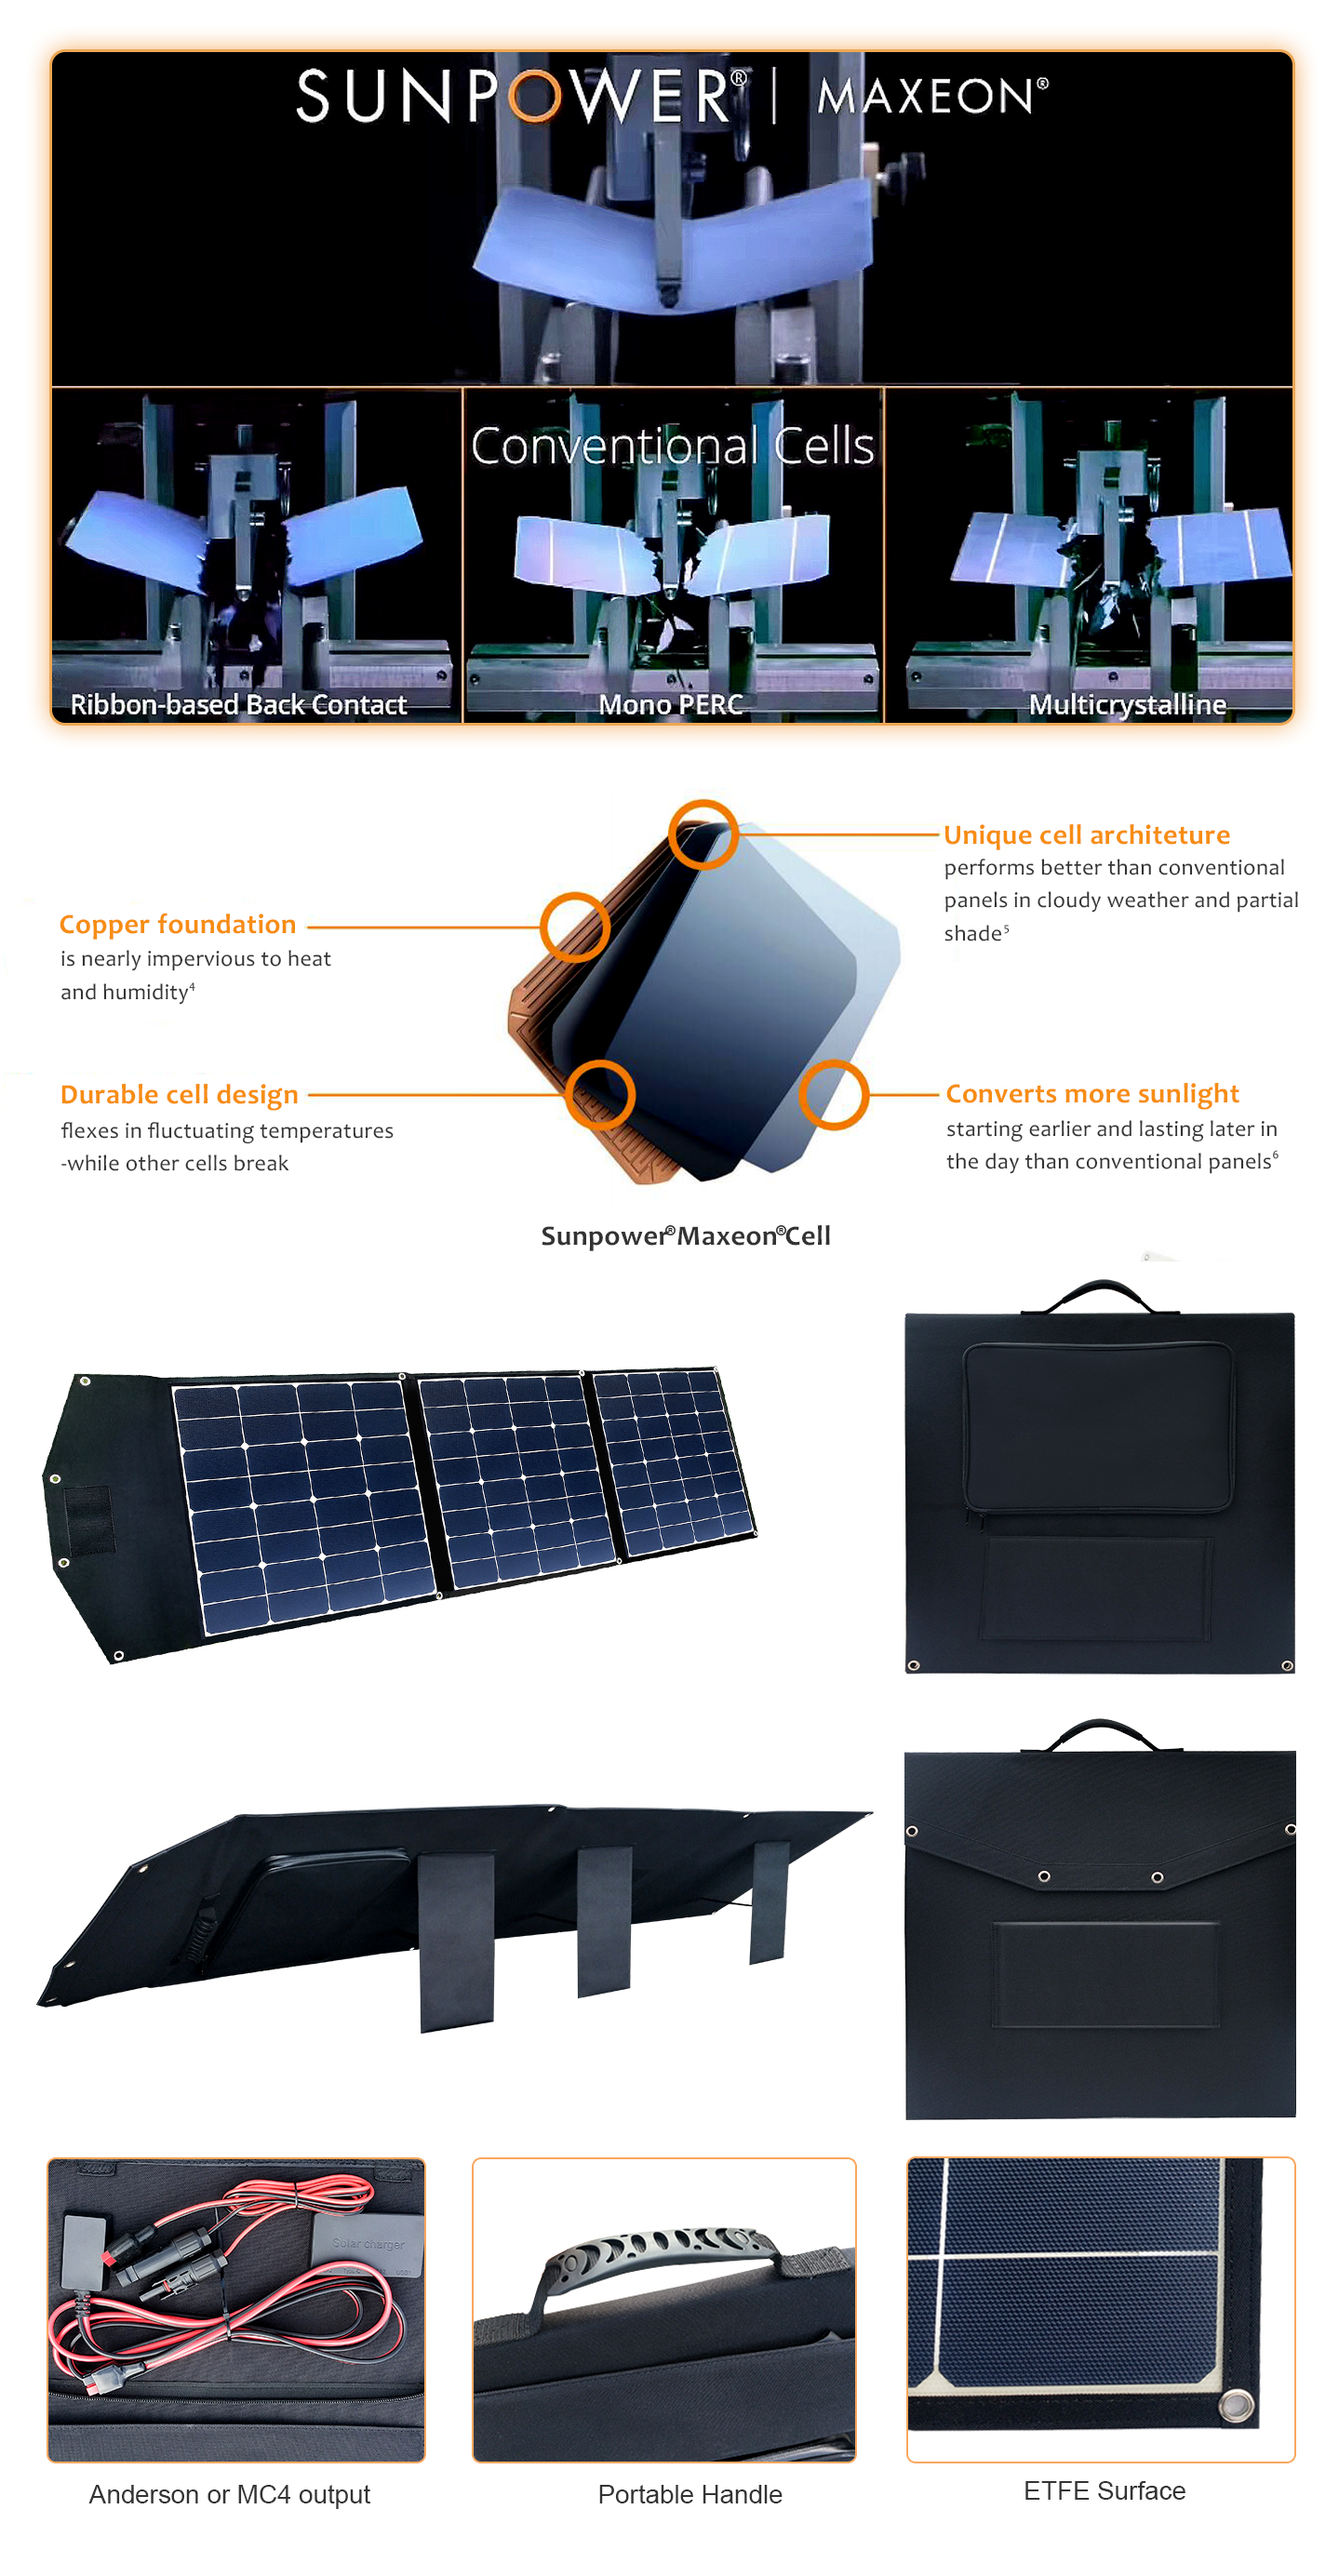 EYONGPV-150W Sunpower Mono Foldable Folding Portable ETFE Solar Panel Kit